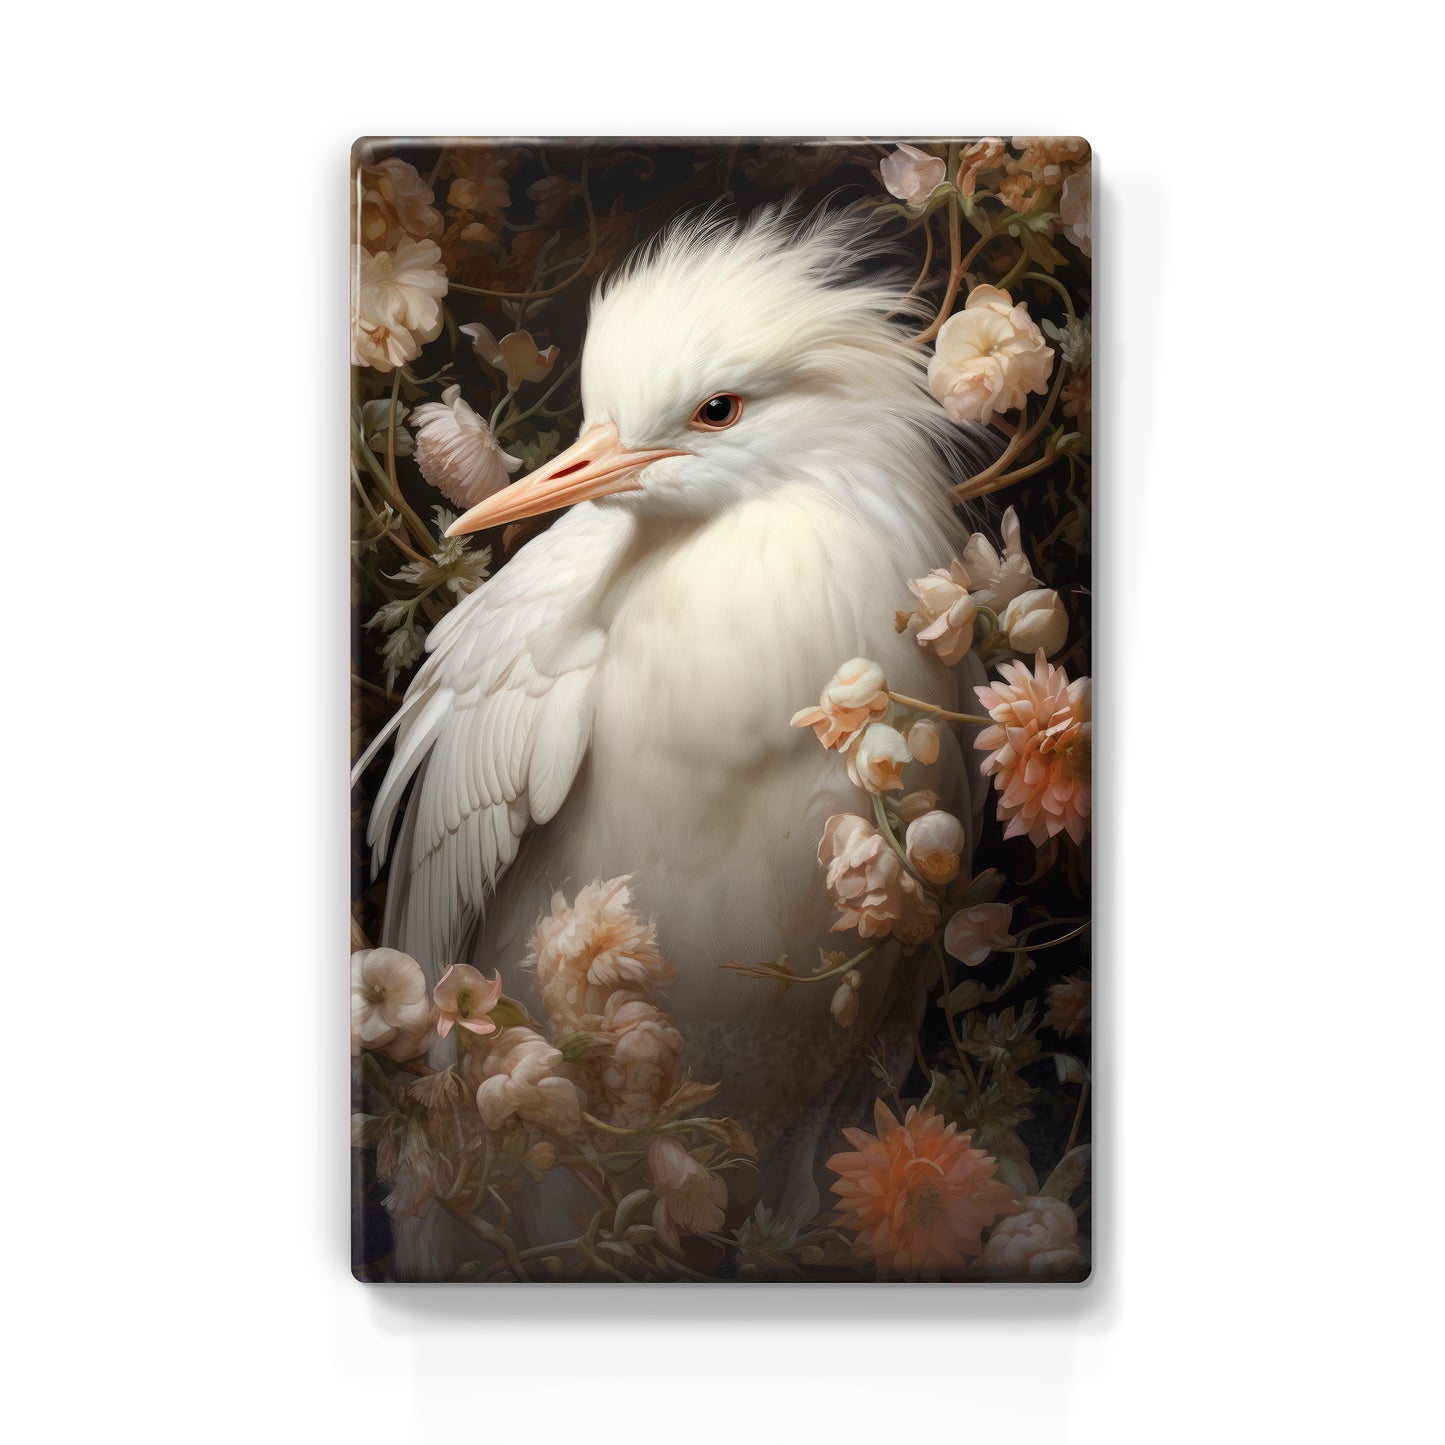 White heron with flowers 2 - Laque print - 19.5 x 30 cm - LP319